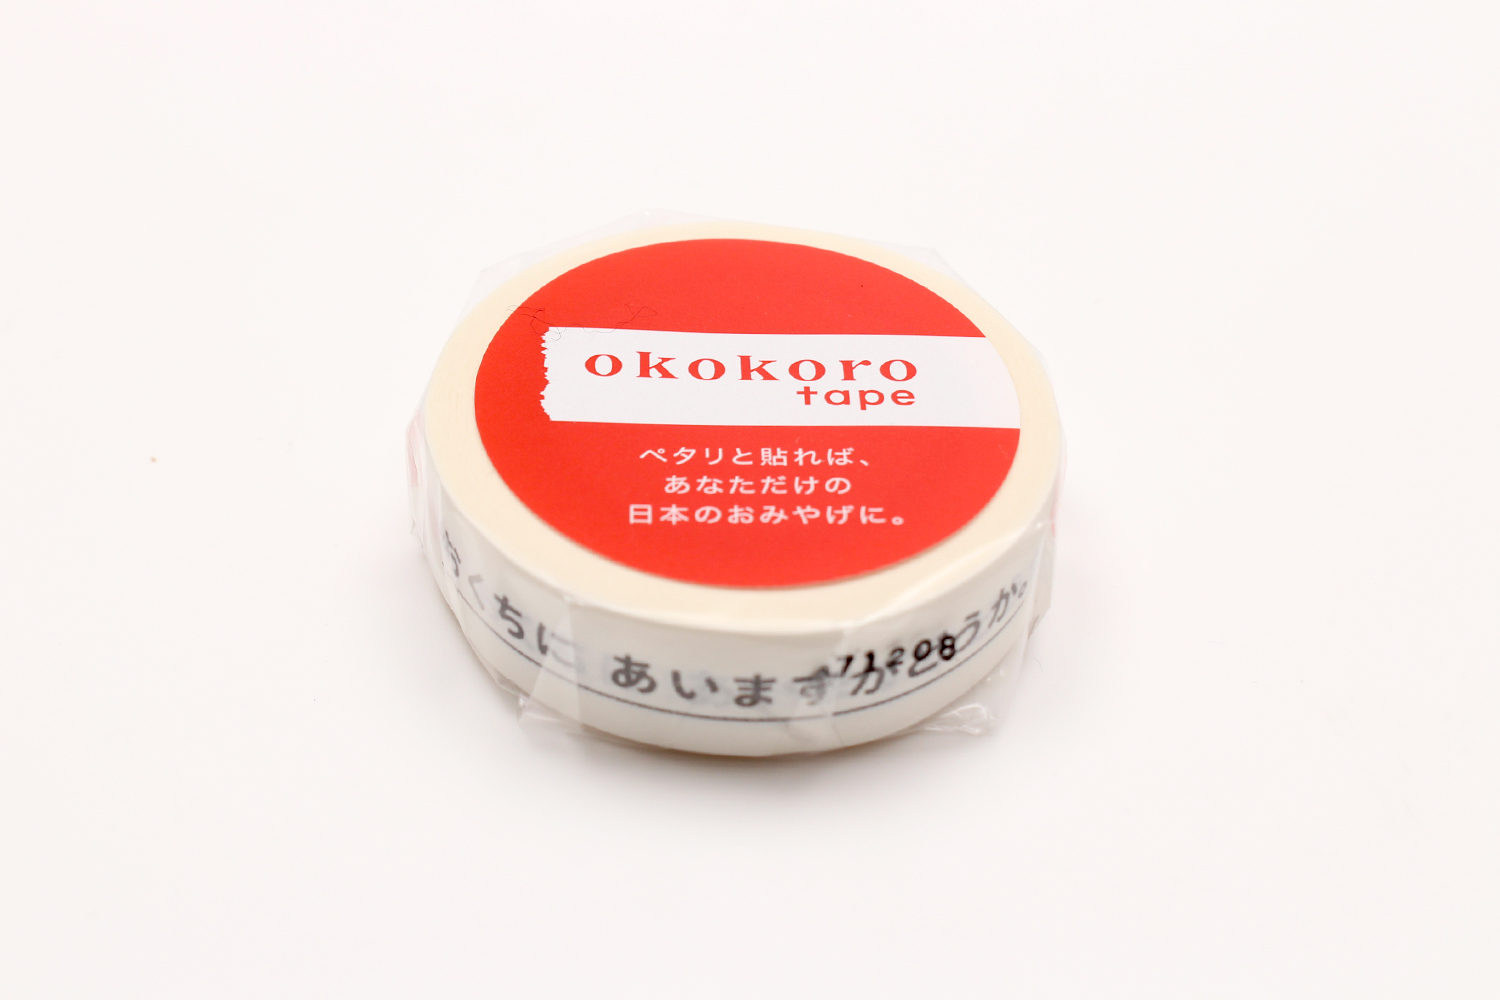 MT Masking Tape 13mm okokoro 2 (japanese souvenir)